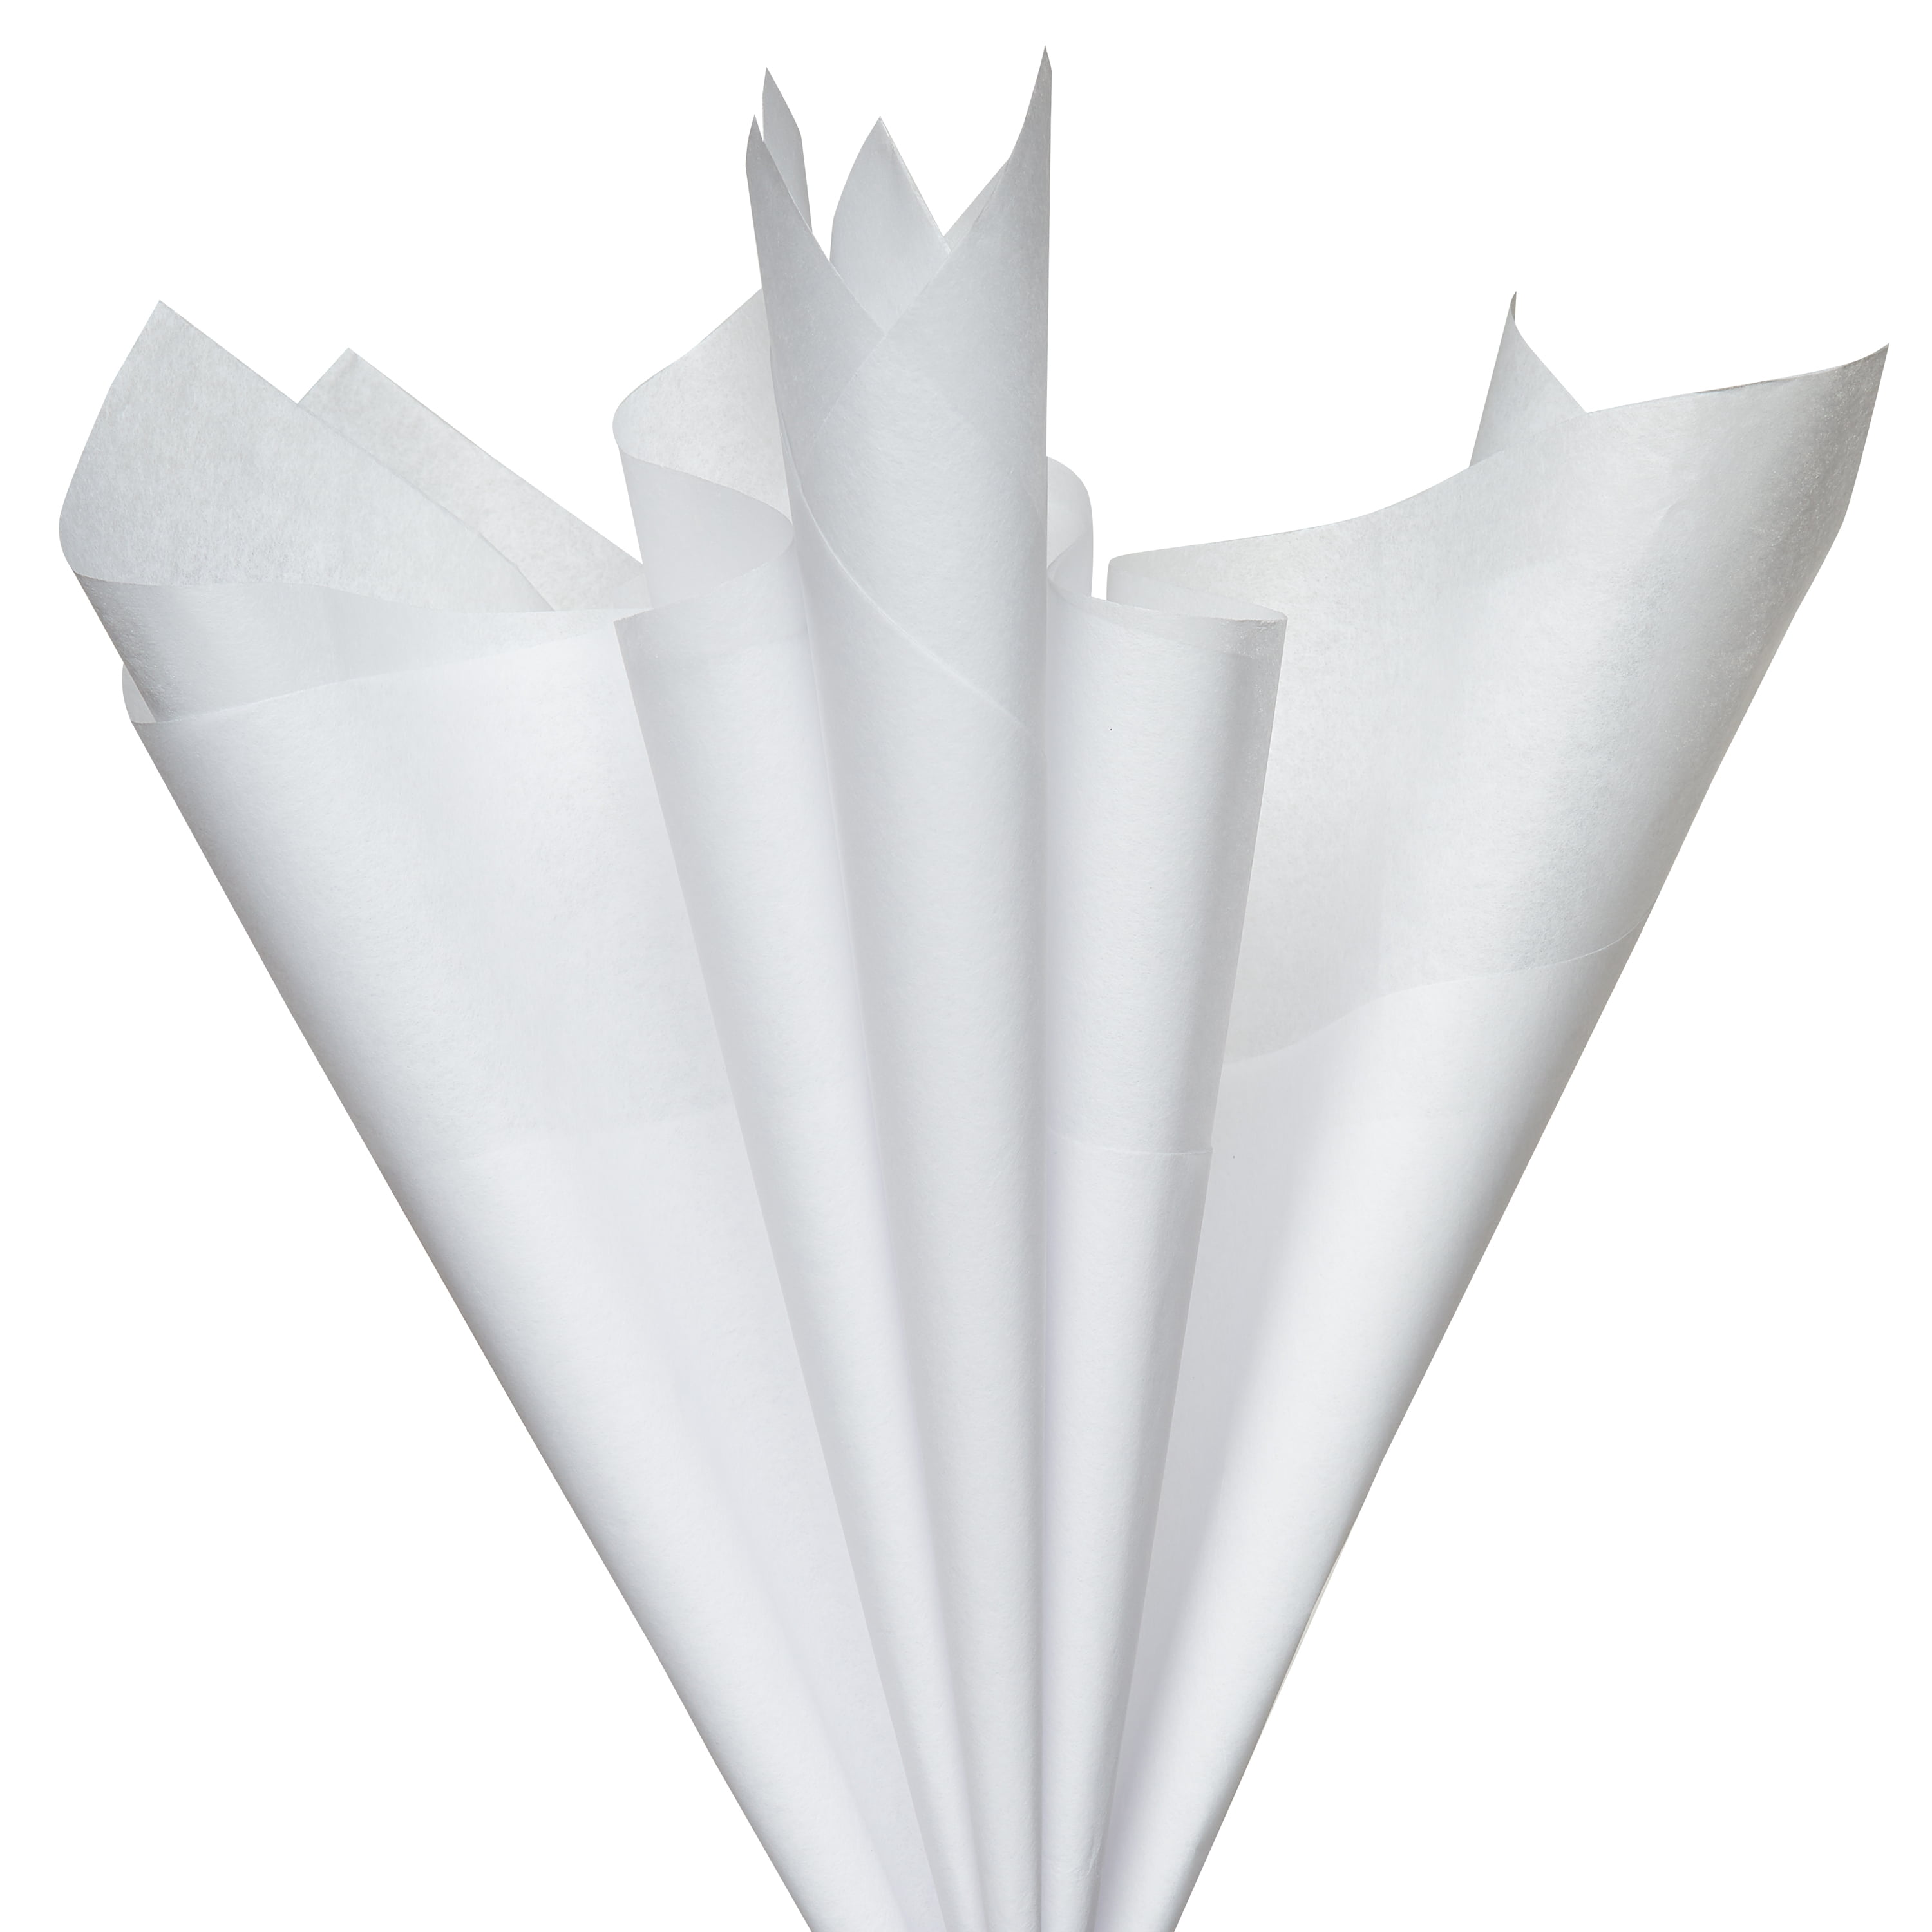 American Greetings Bulk White Tissue Paper, 20 x 20 (125-Sheets